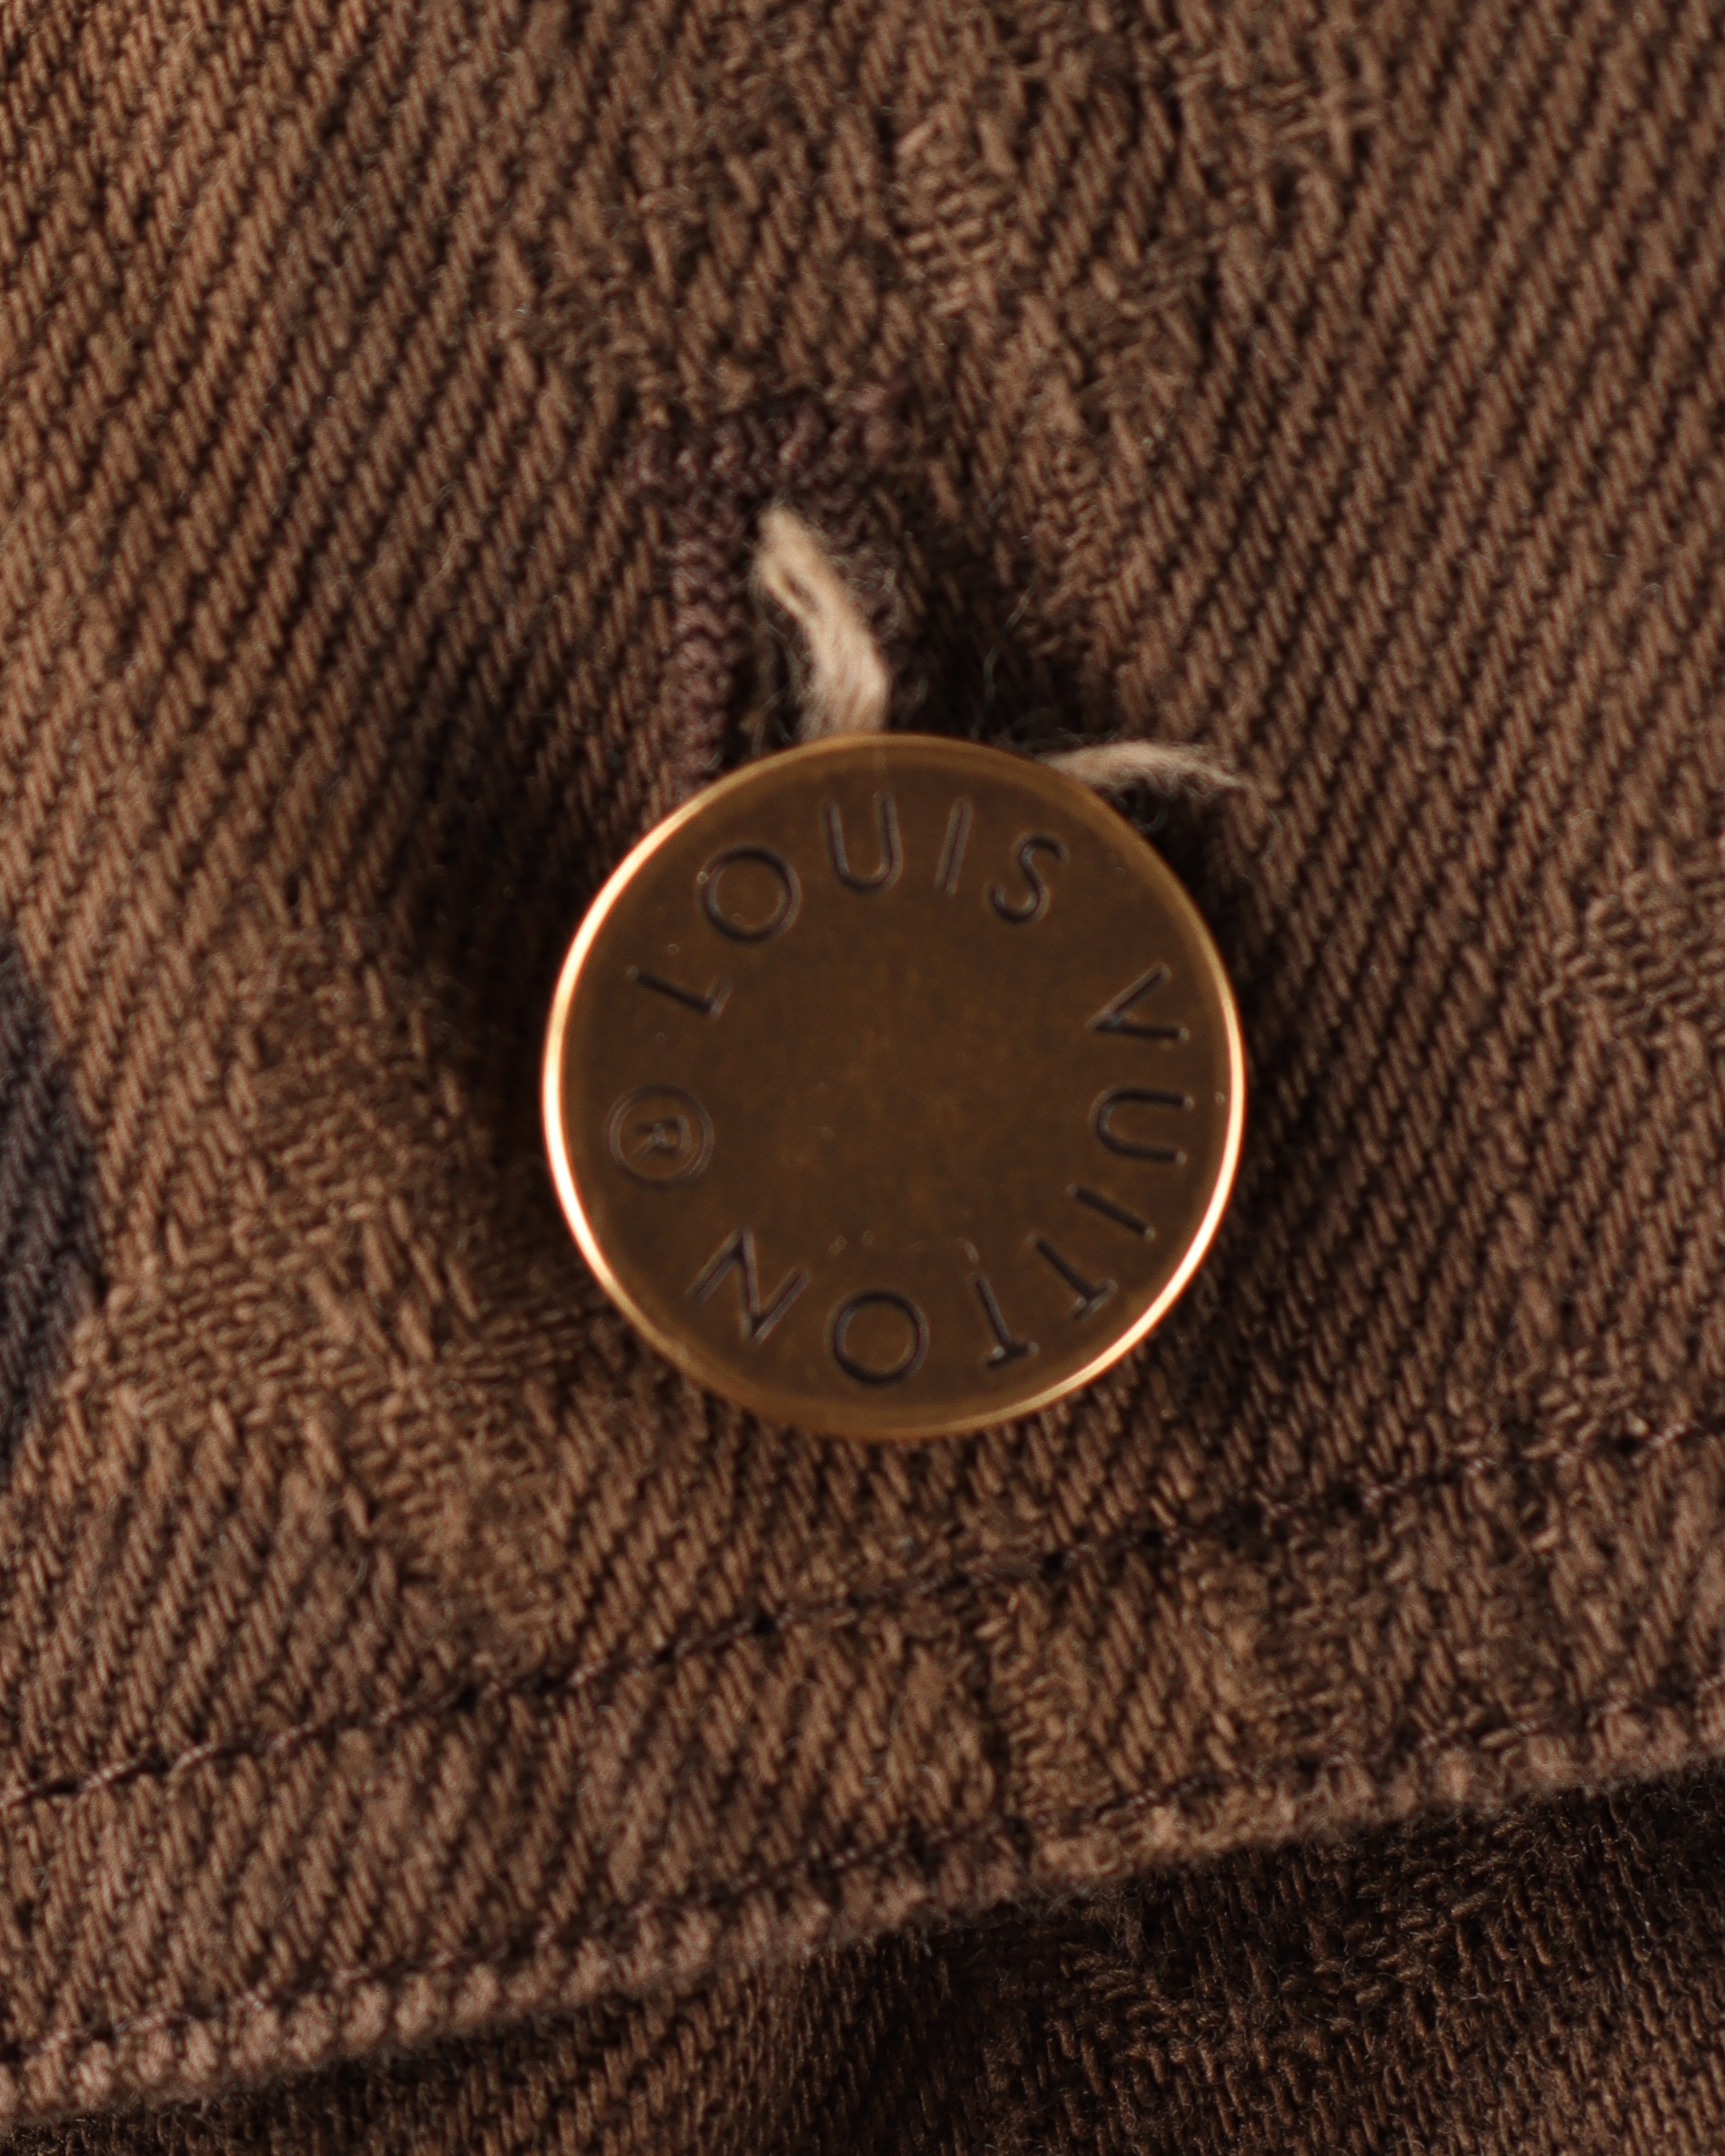 MARKED EU — Louis Vuitton x Supreme Camo Denim Jacket